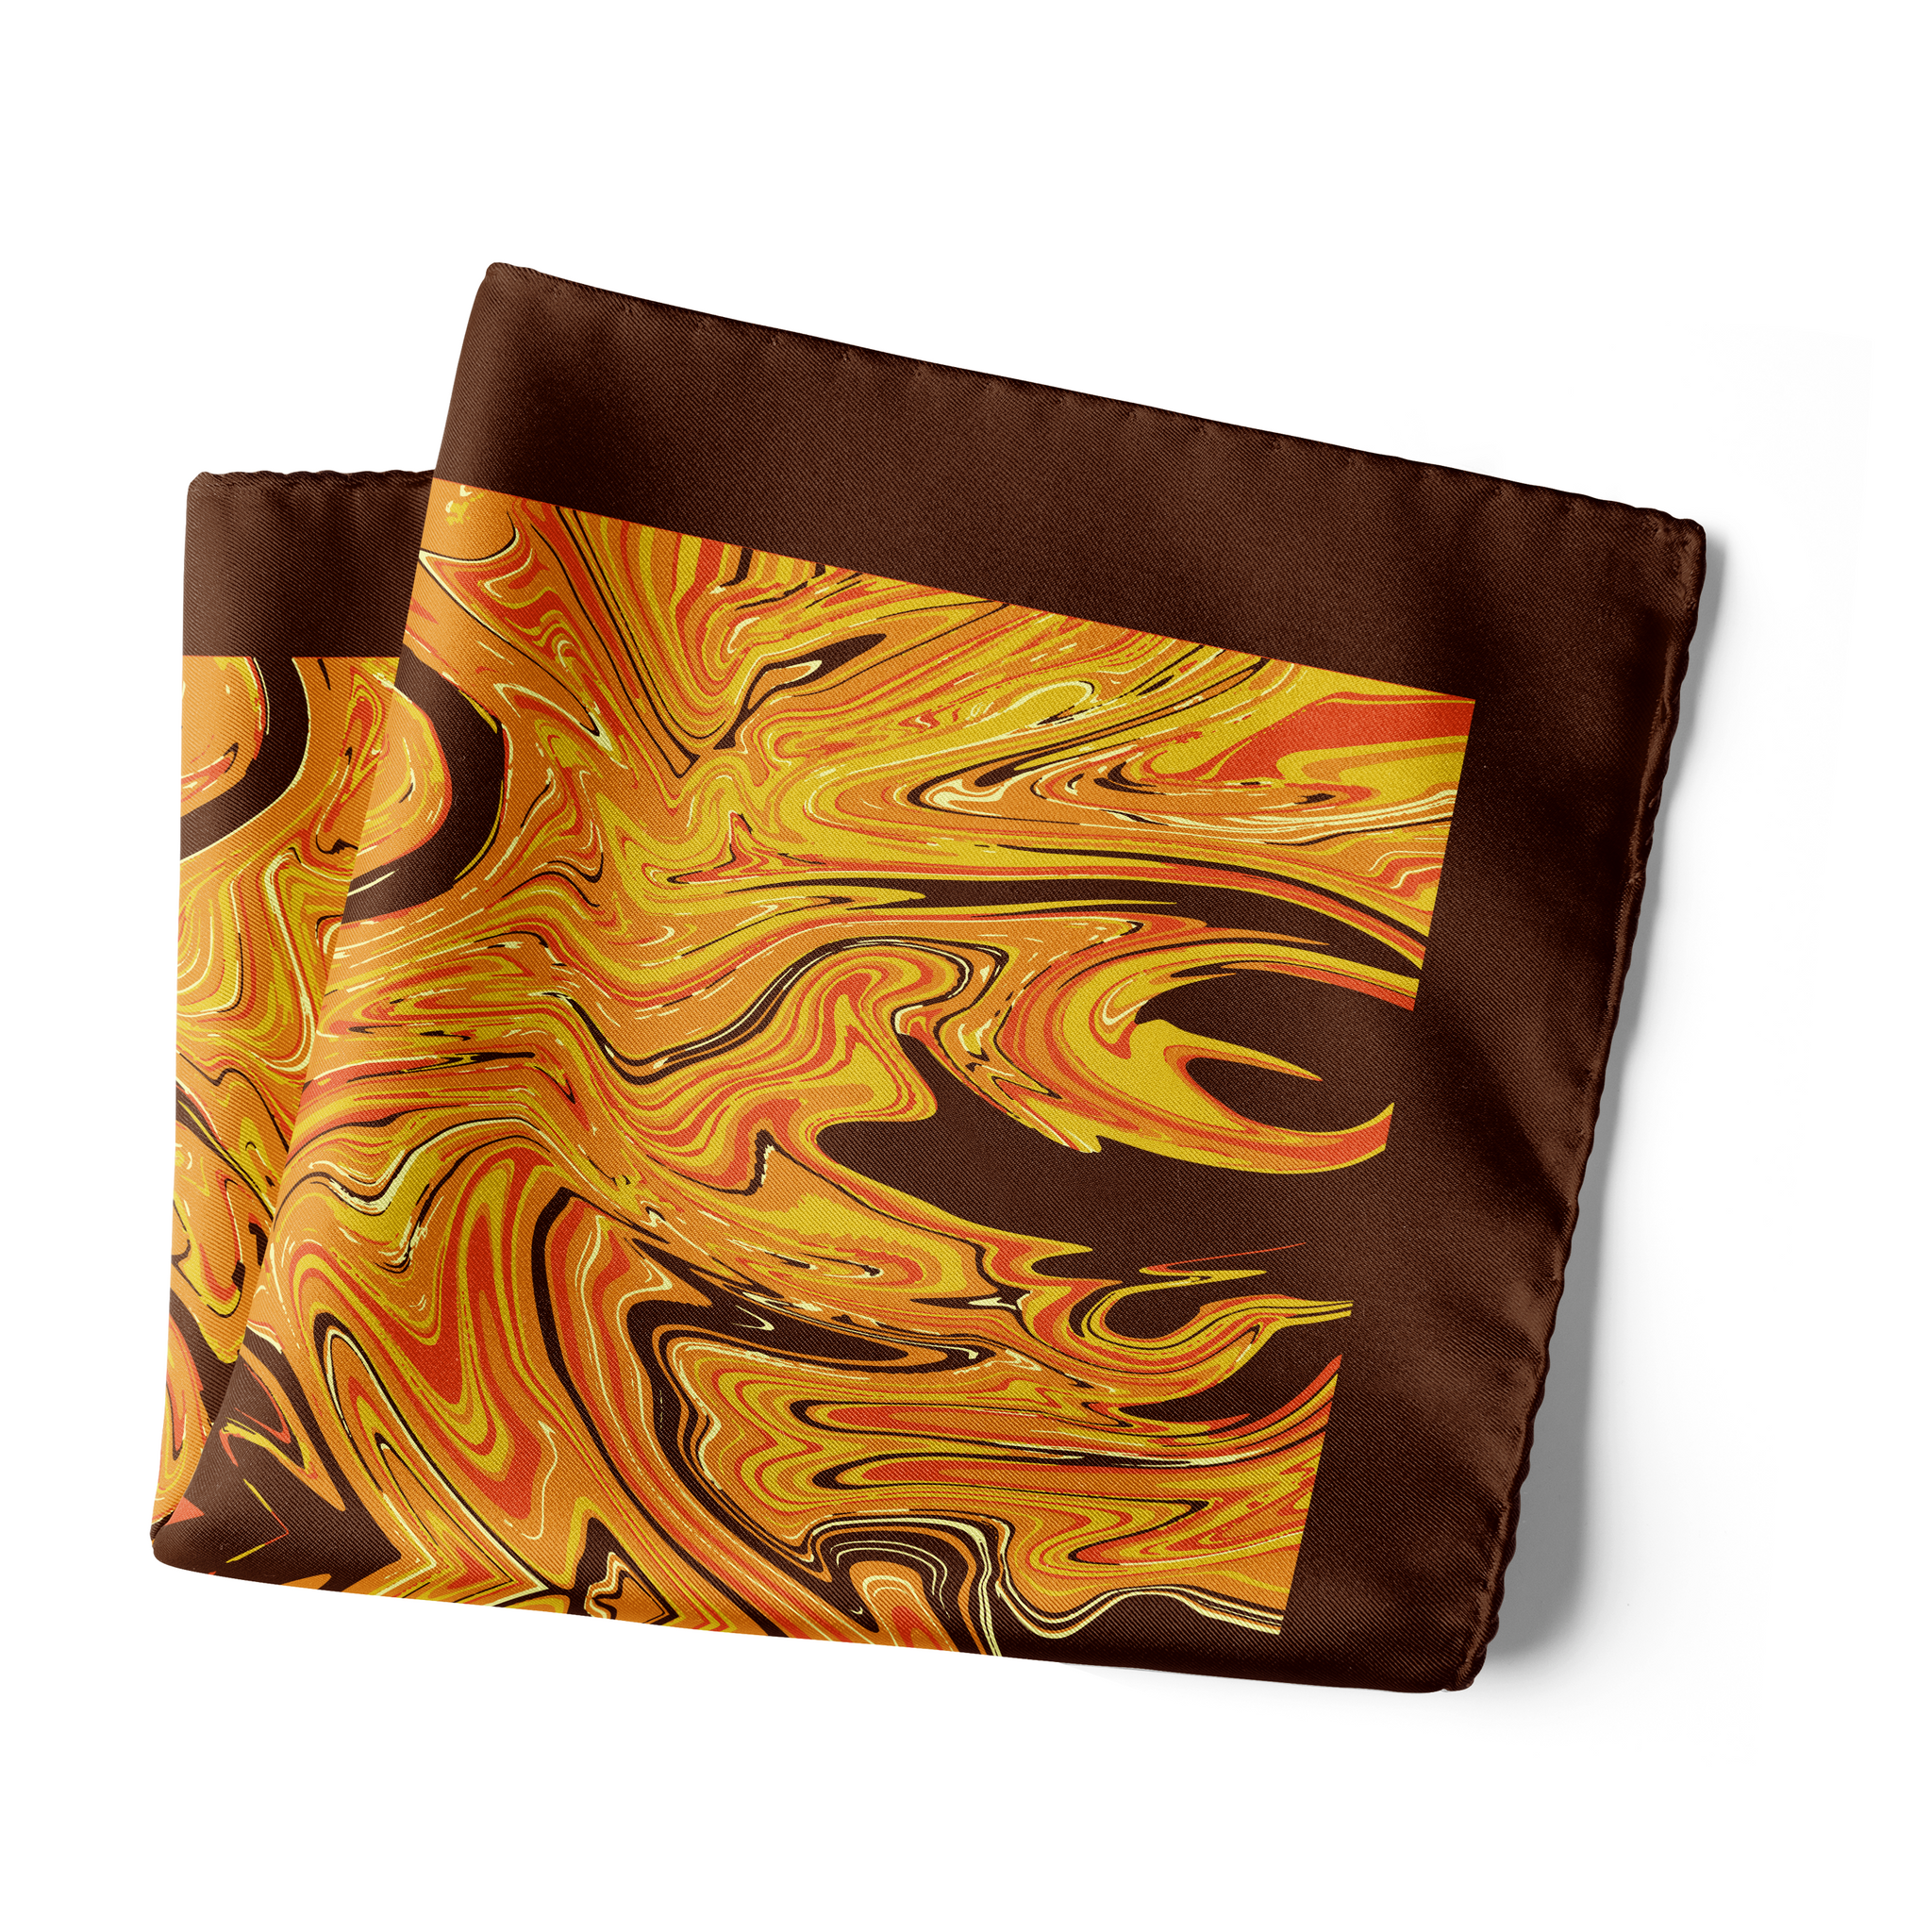 Chokore Choc Brown & Orange Silk Pocket Square from the Marble Design range